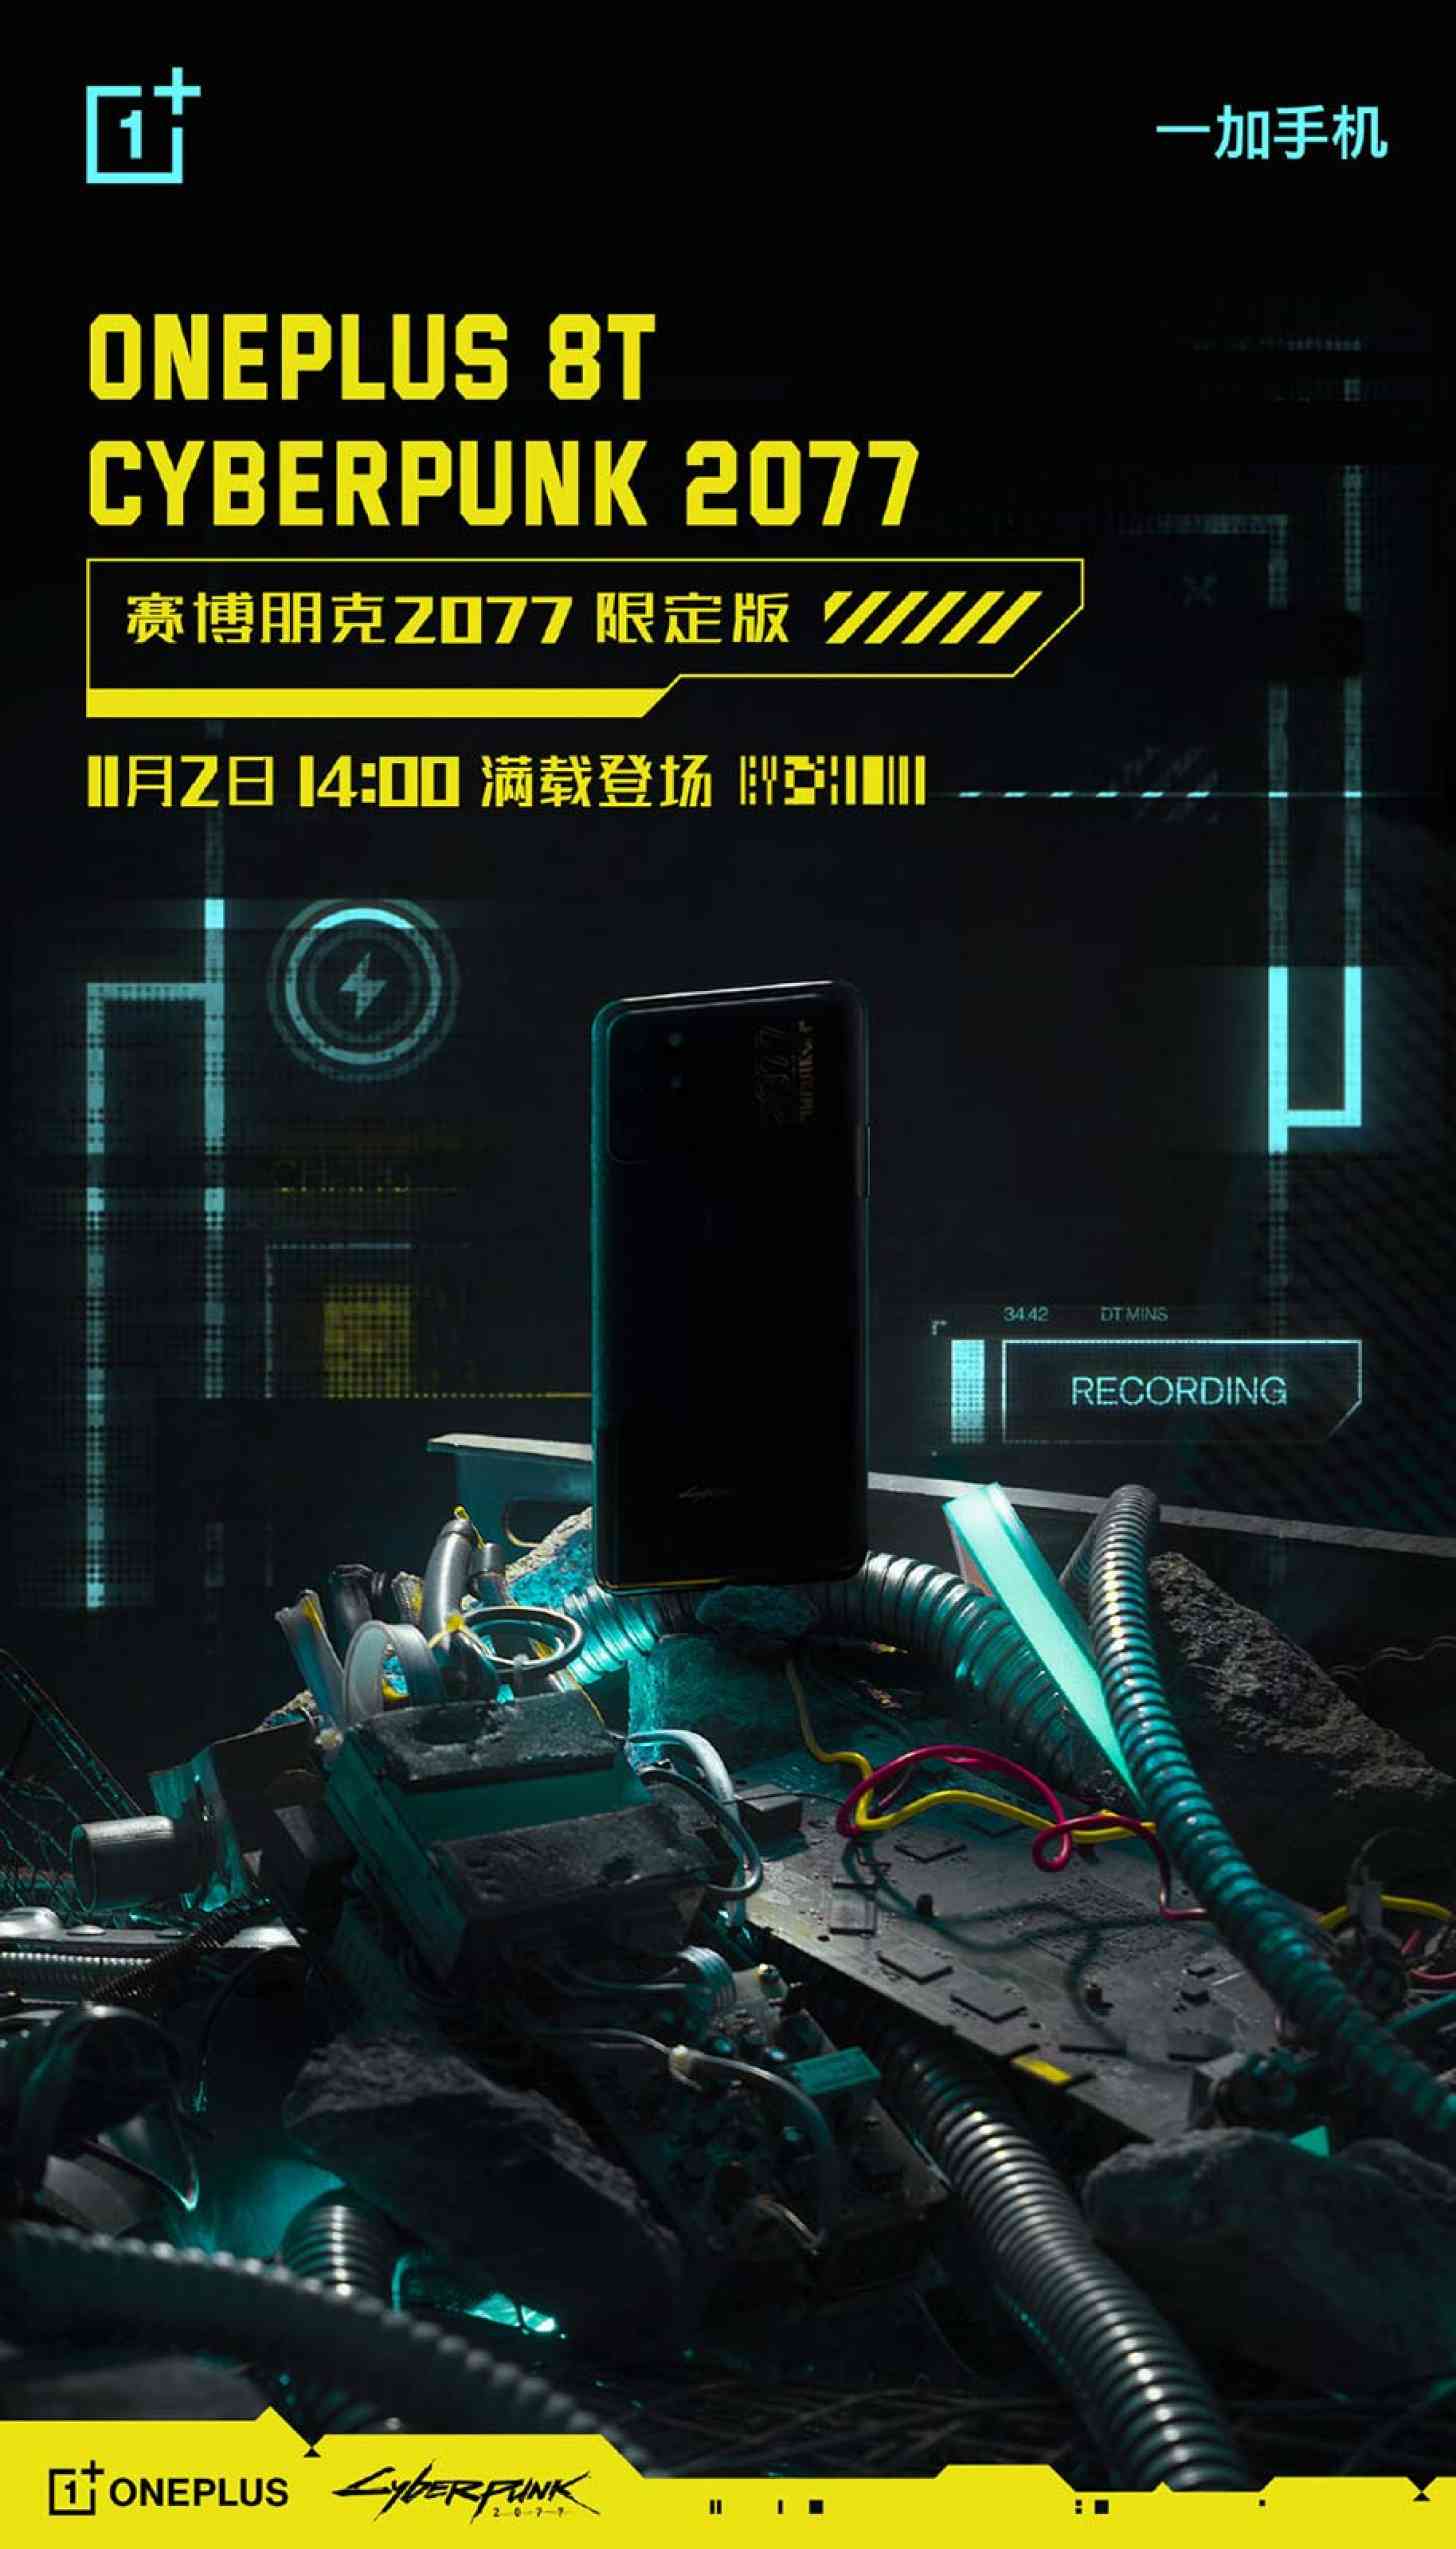 OnePlus 8T Cyberpunk 2077 teaser image